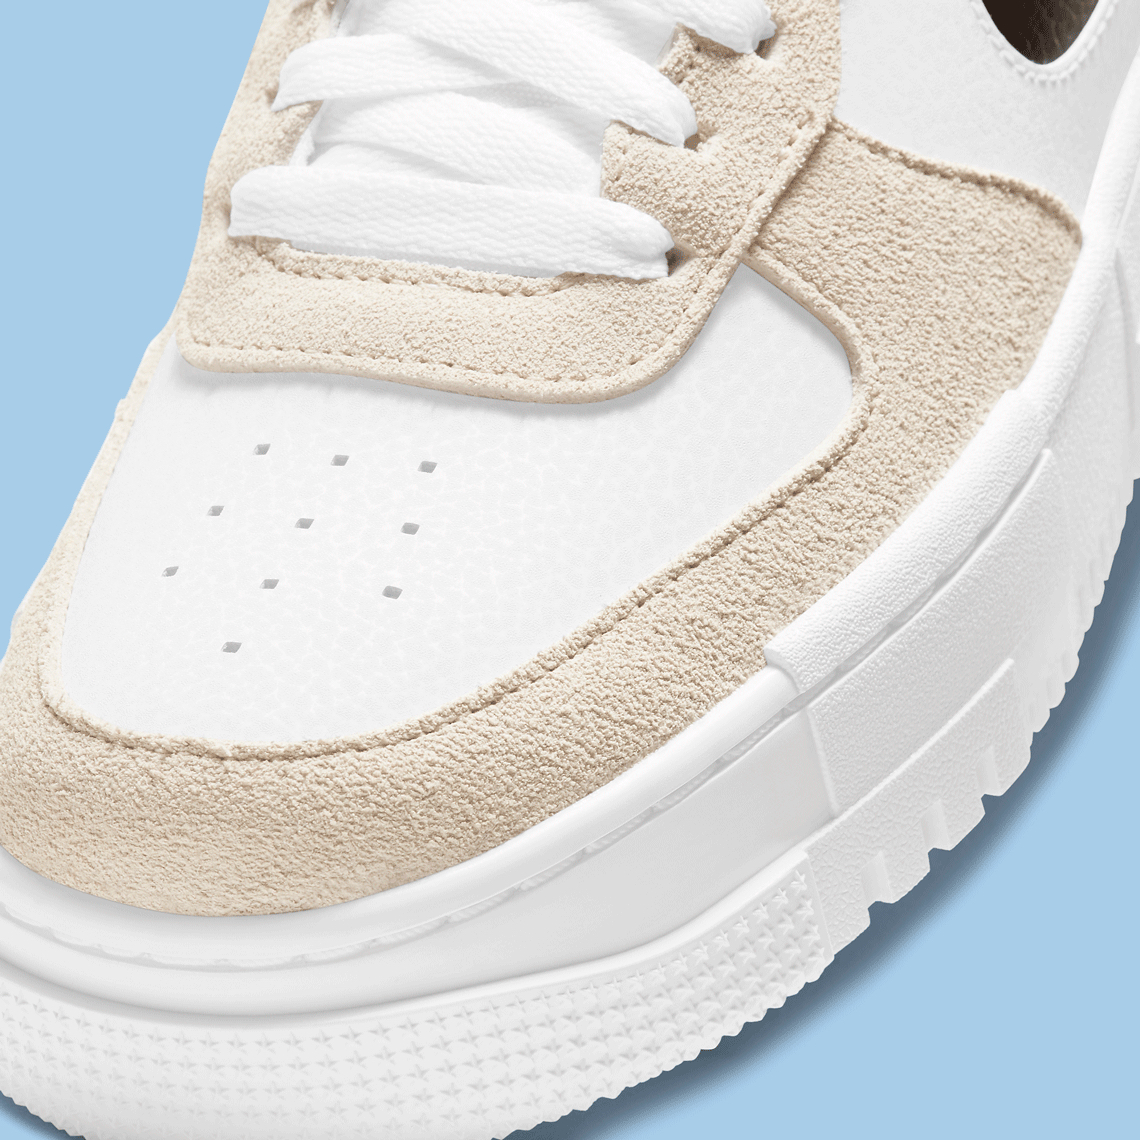 Nike air jordan xiii shoes Pixel Dh3861 001 6